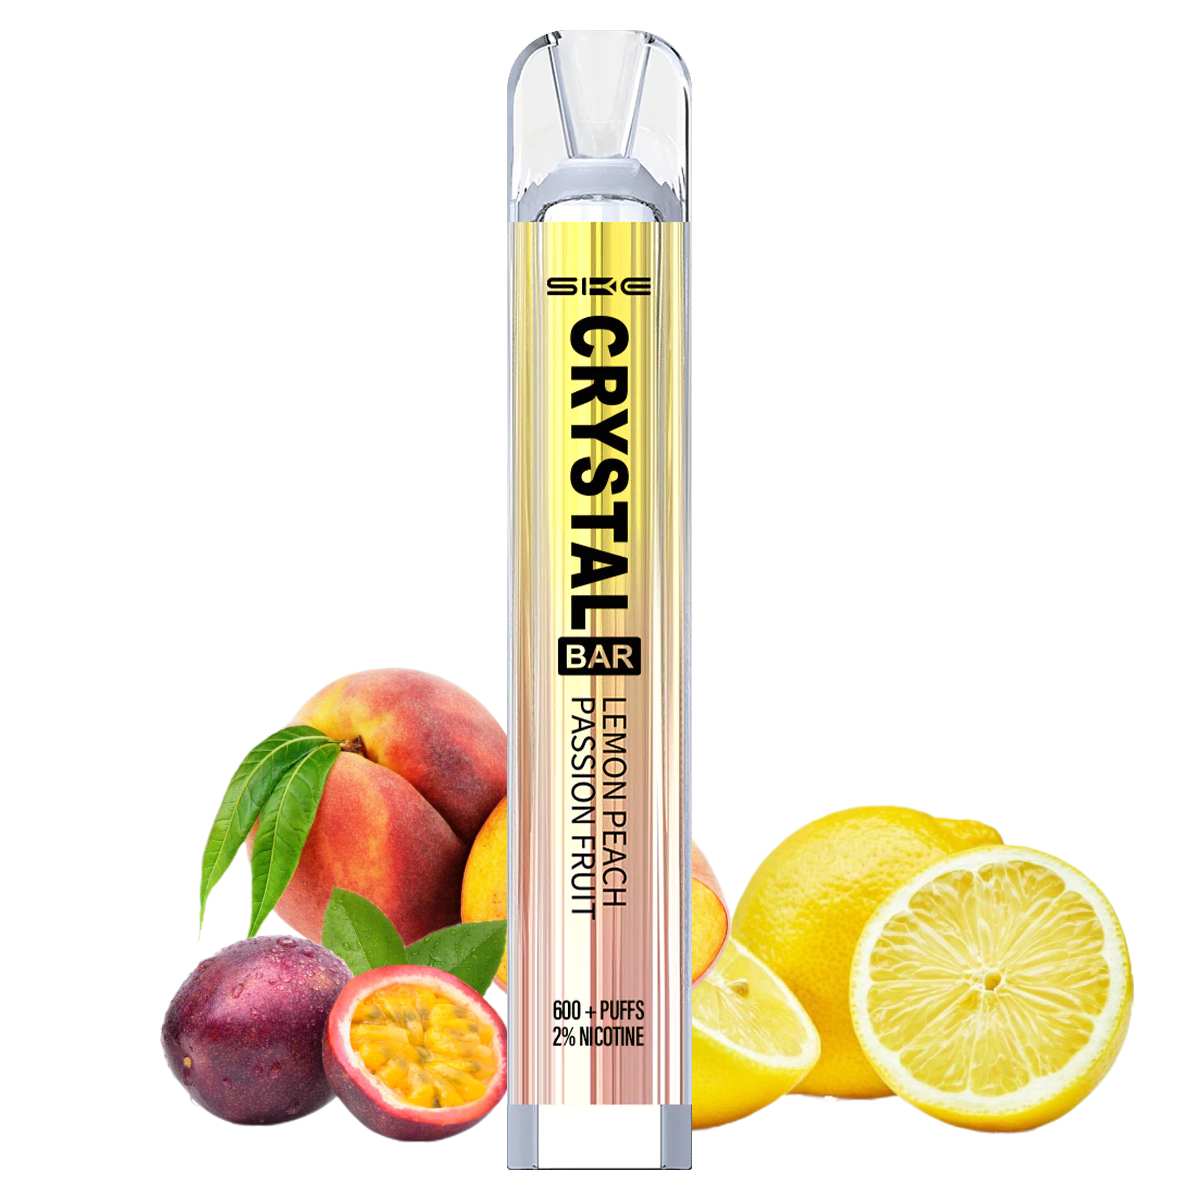 SKE Crystal Bar 2% Nicotine Disposable 600 Puffs Vape - Lemon Peach Passion Fruit